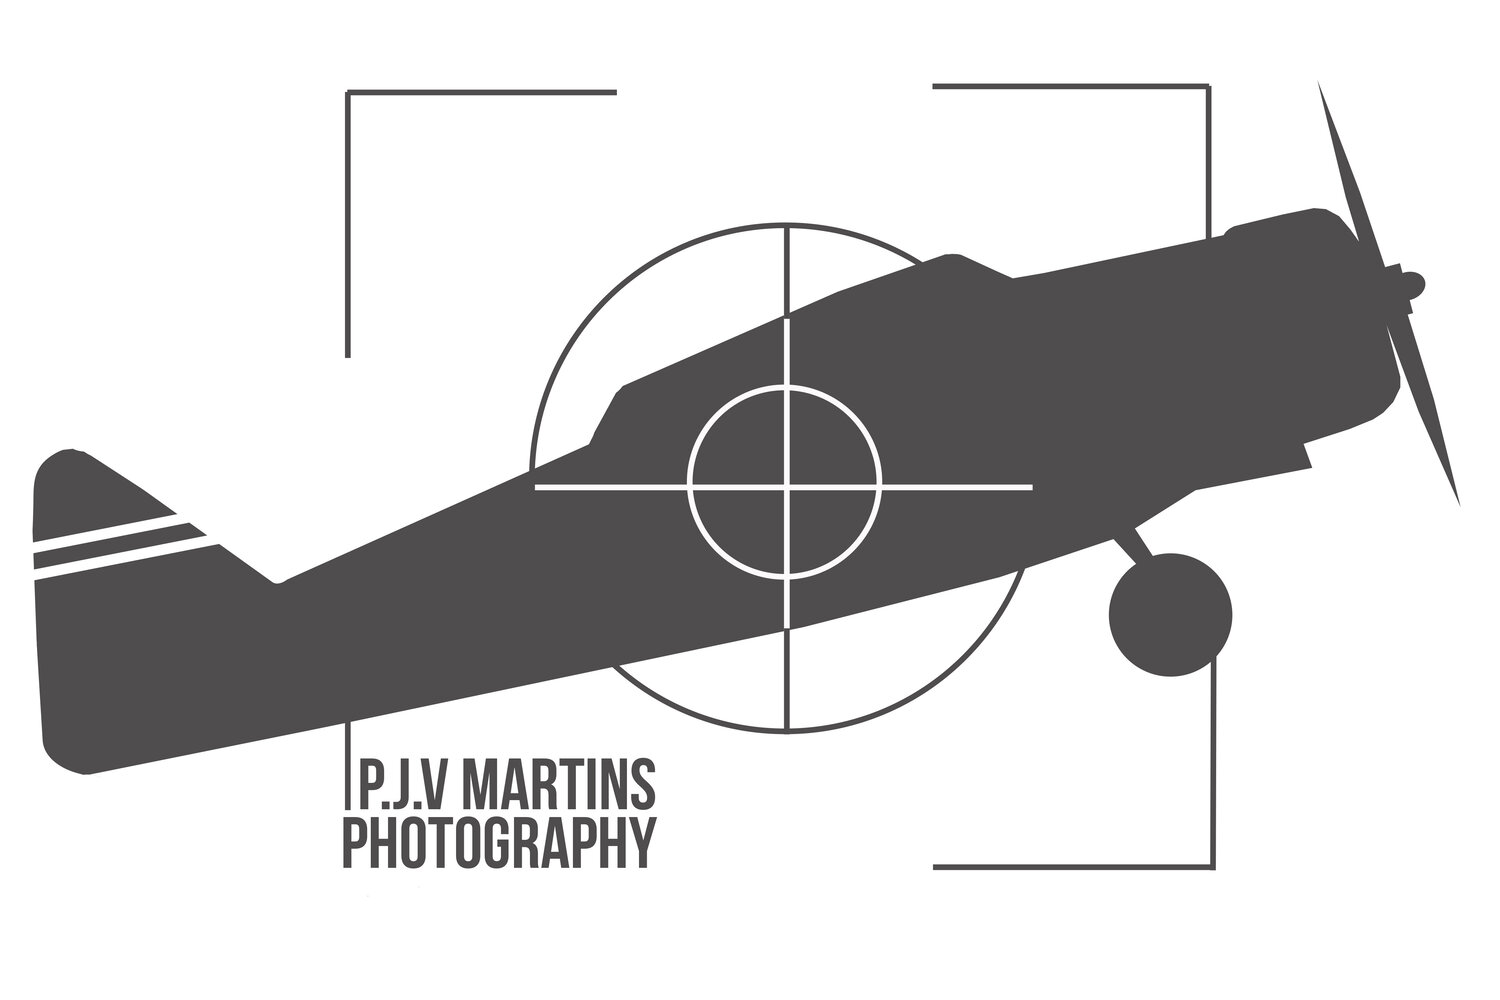 P.J.V Martins Photography